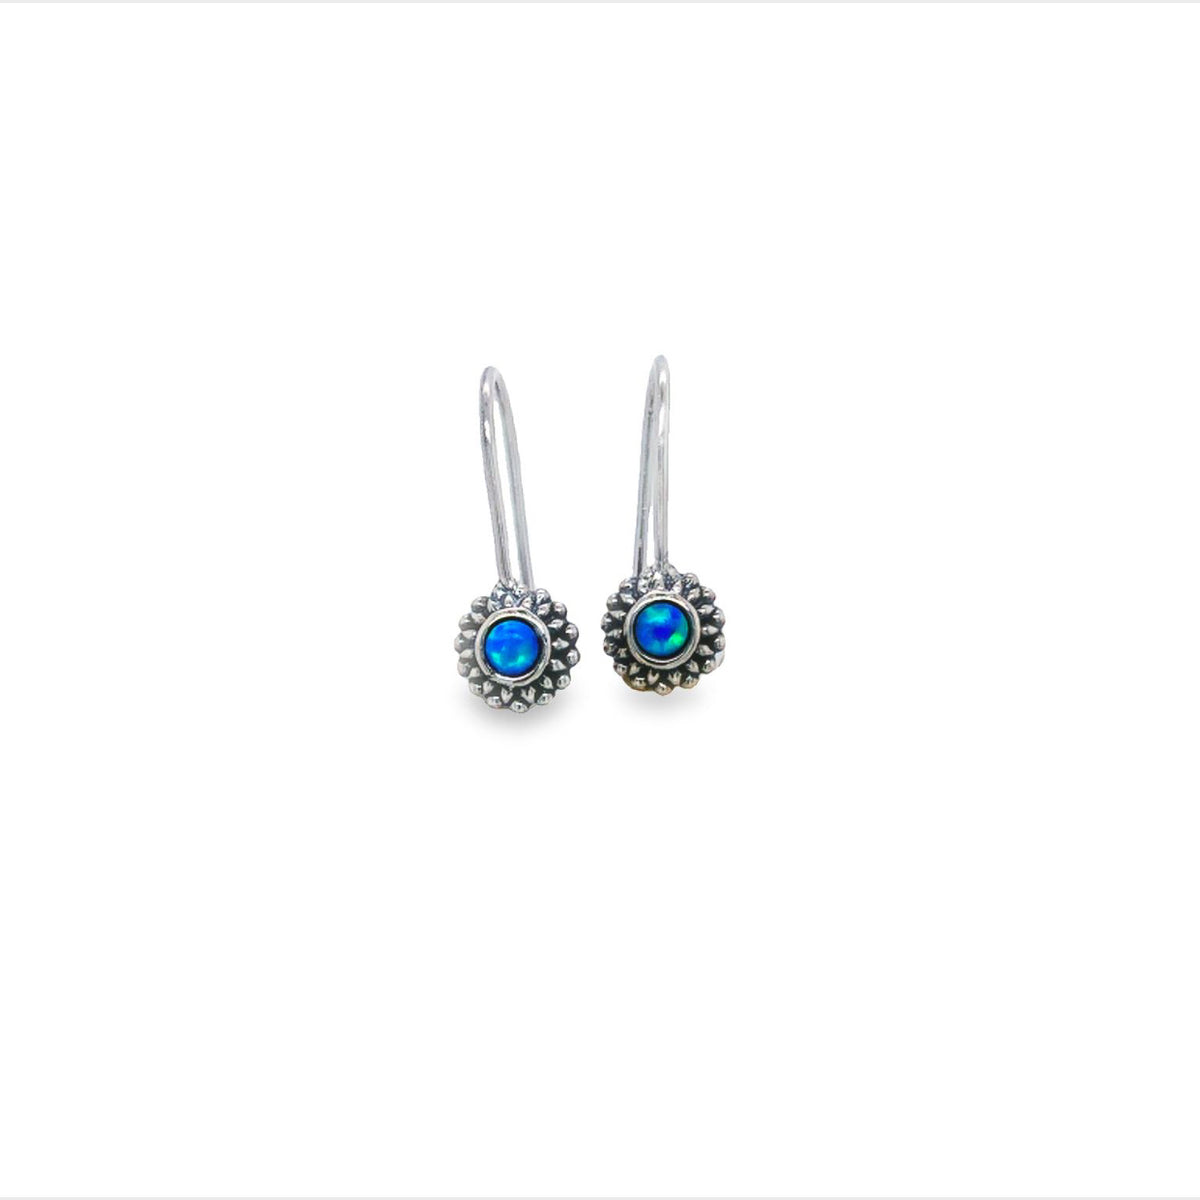 Silver Blue Opalite Bezel Set With Beaded Edge Earrings With Fixed Shep Hooks